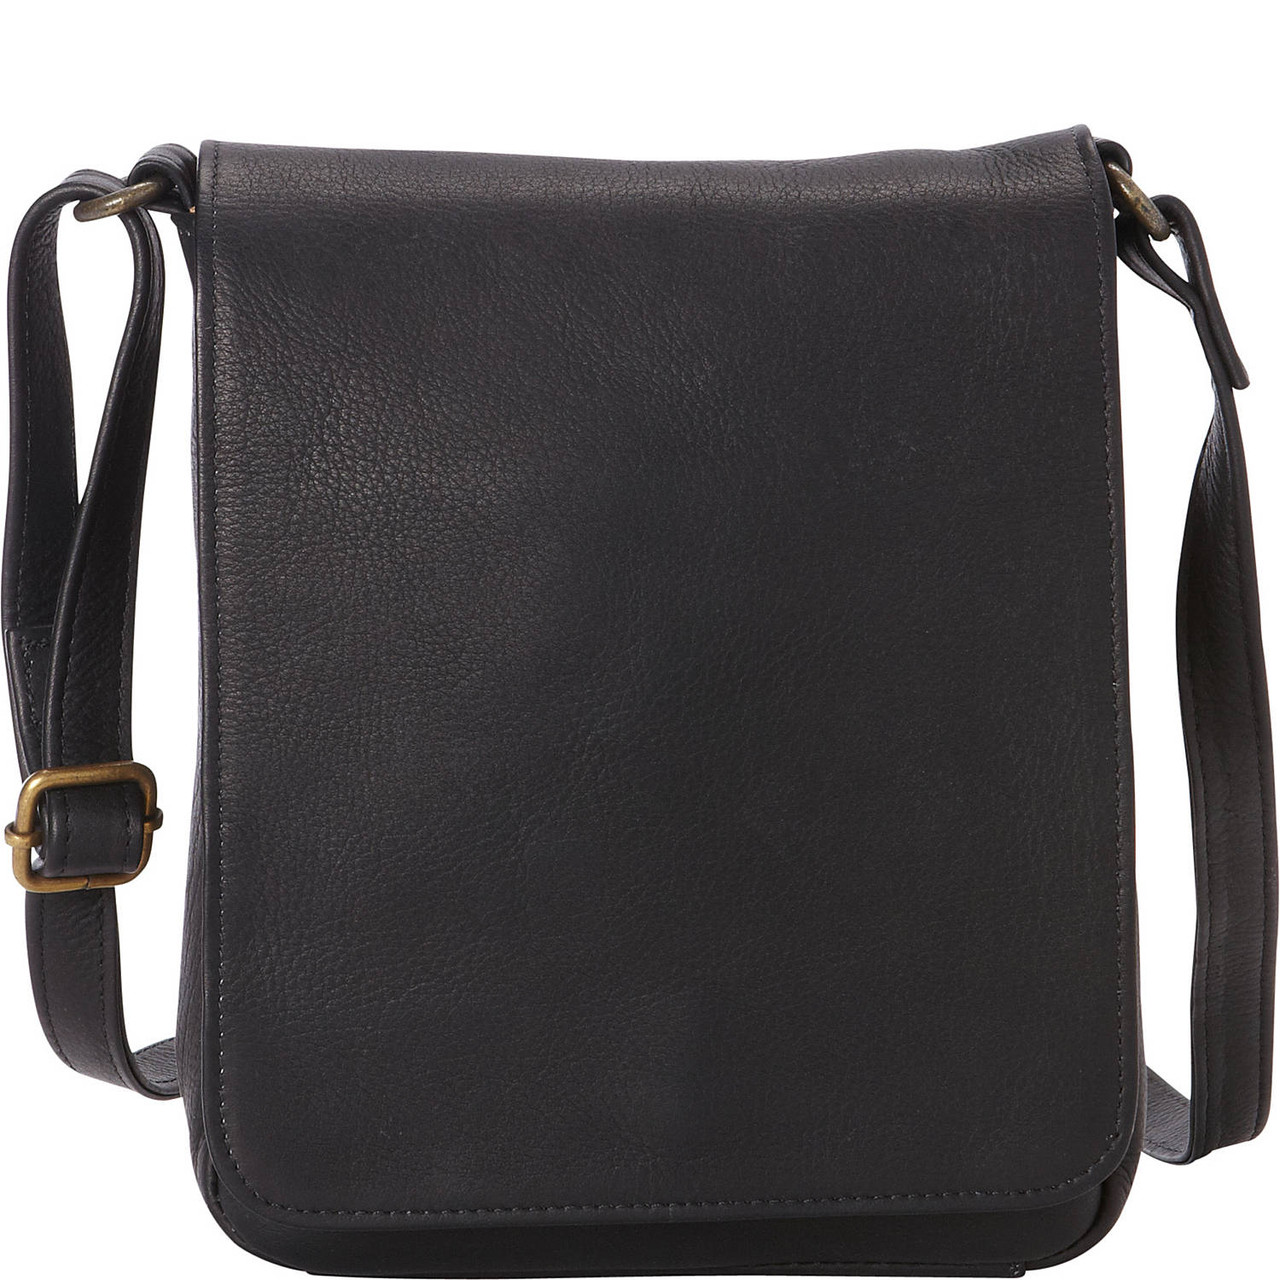 Le Donne Leather Simple Flap Over Crossbody Bag T-784 - Walmart.com